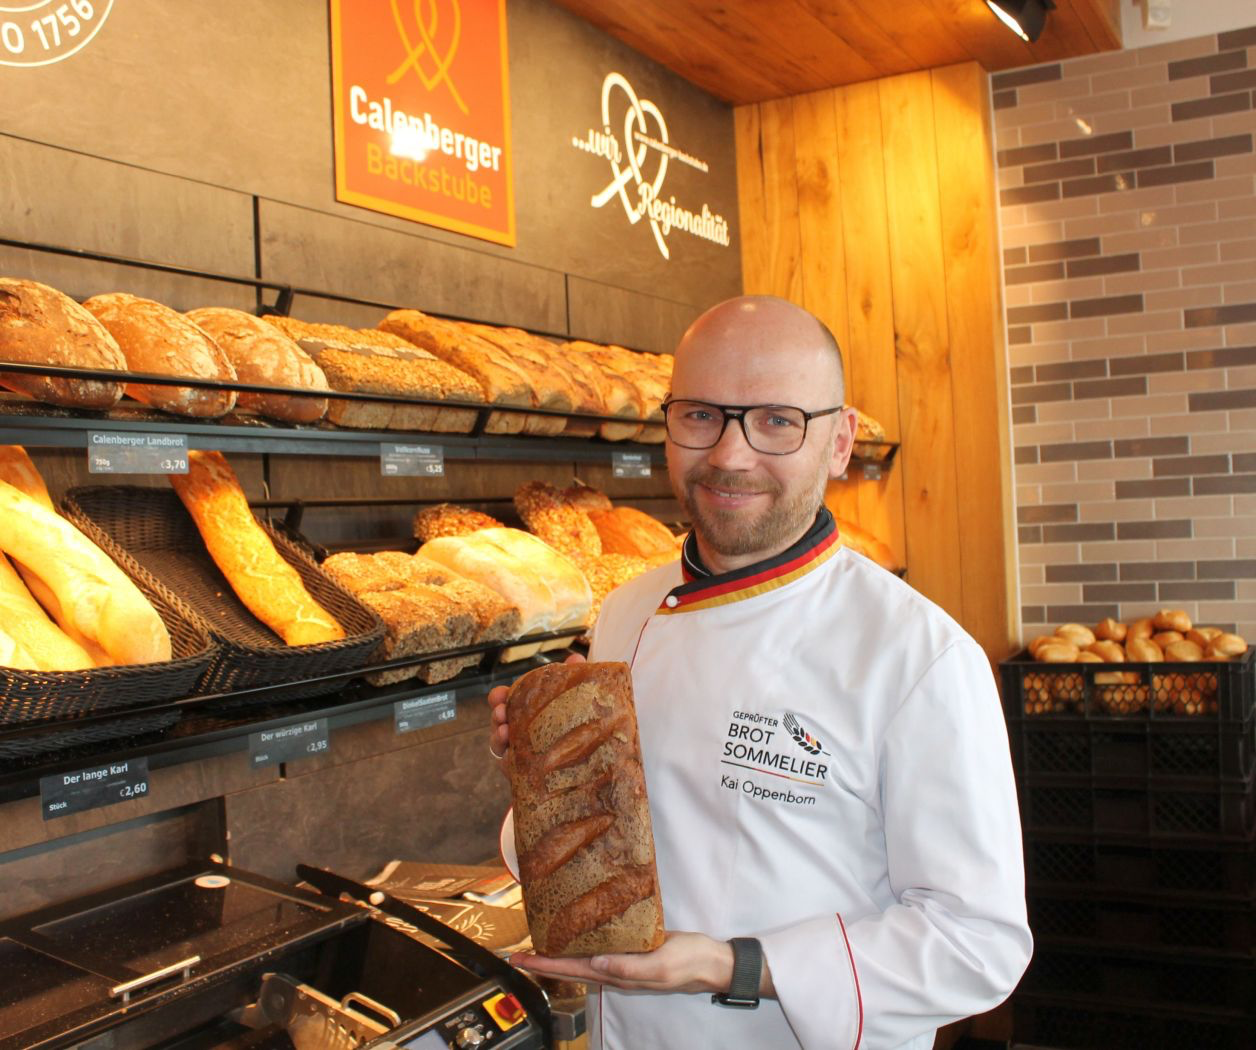 Calenberger Backstube – Inhaber Kai Oppenborn ist frisch gebackener Brot-Sommelier